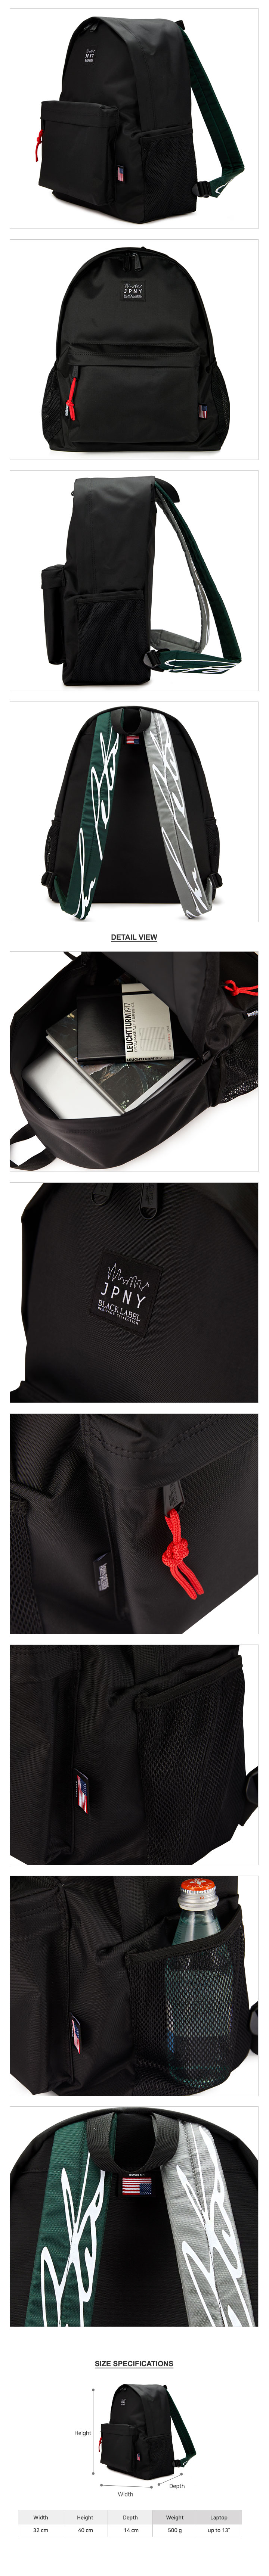 JPNY 1112 Backpack Black (Green+Gray)